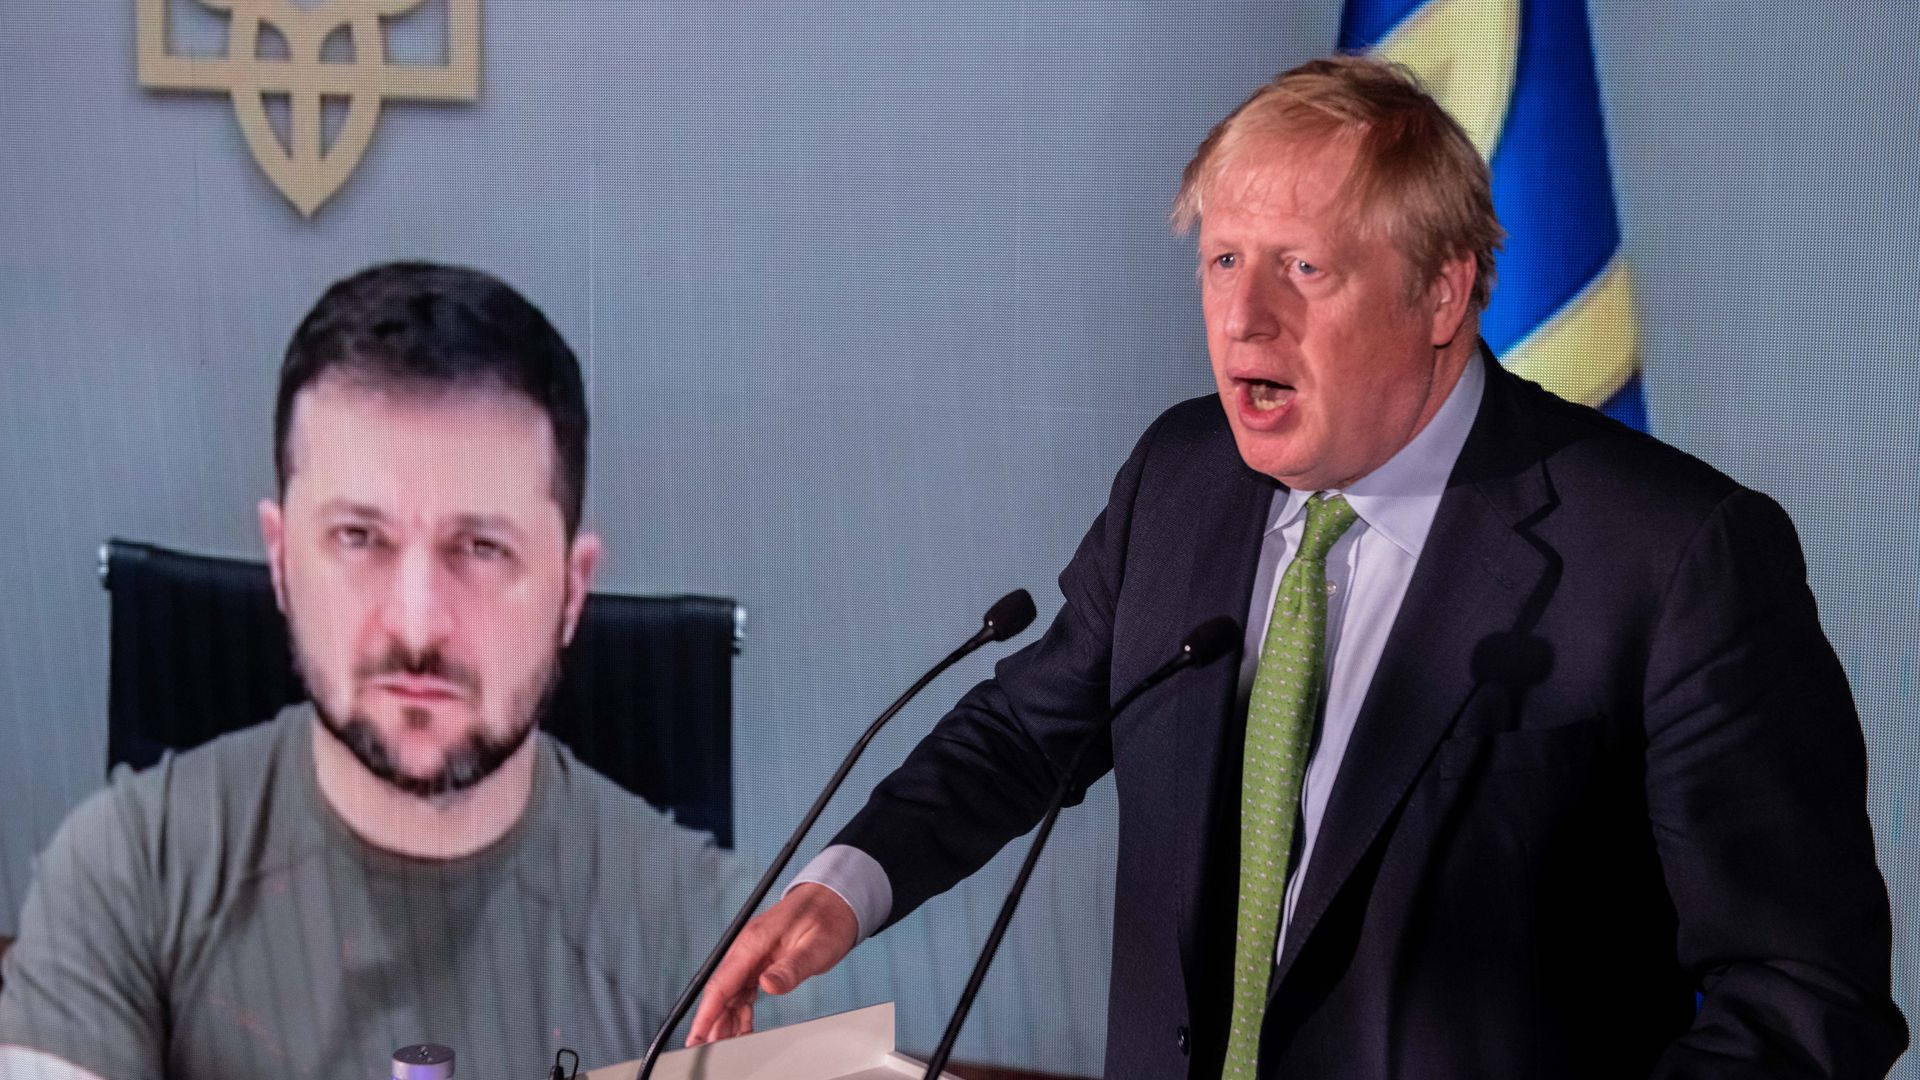 Boris Johnson speaks in front of a live video feed showing Ukrainian President Volodymyr Zelenskyy 